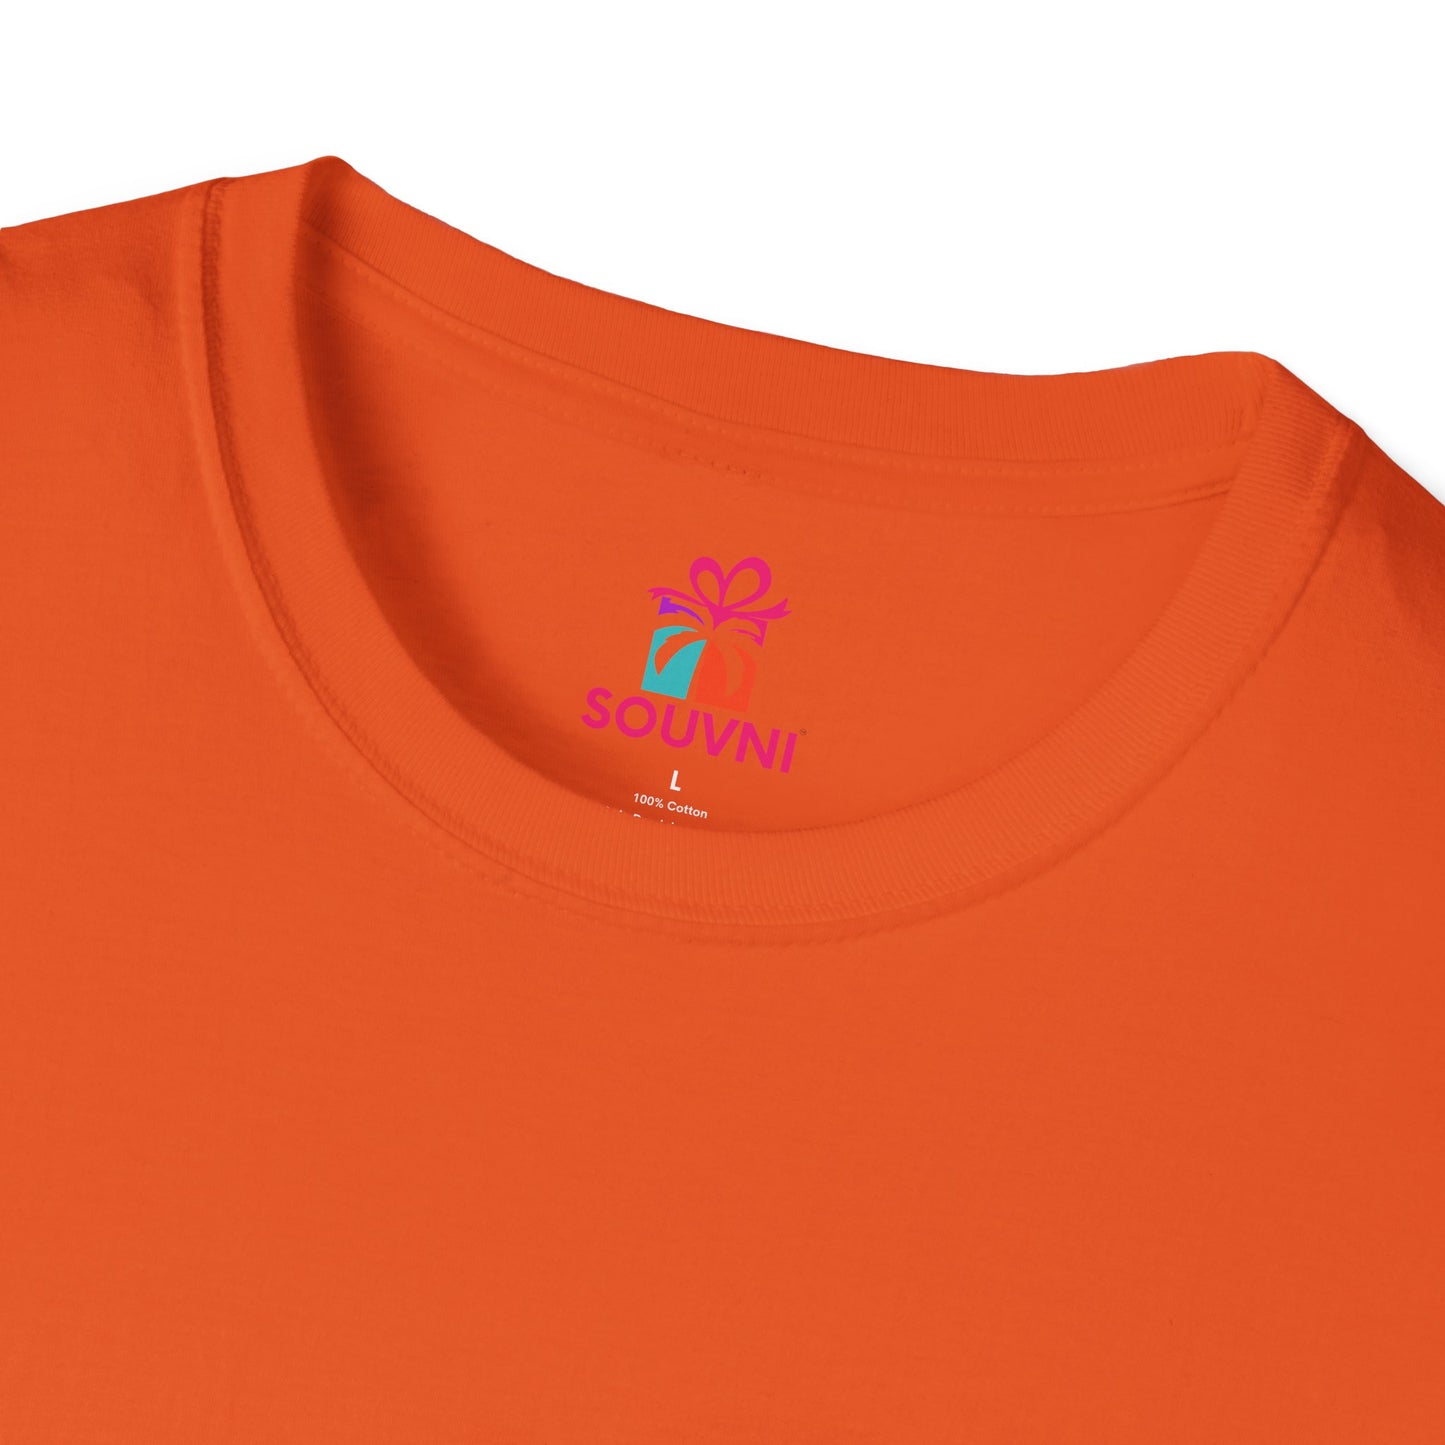 Unisex Softstyle T-Shirt - Haiti Strong T-shirt